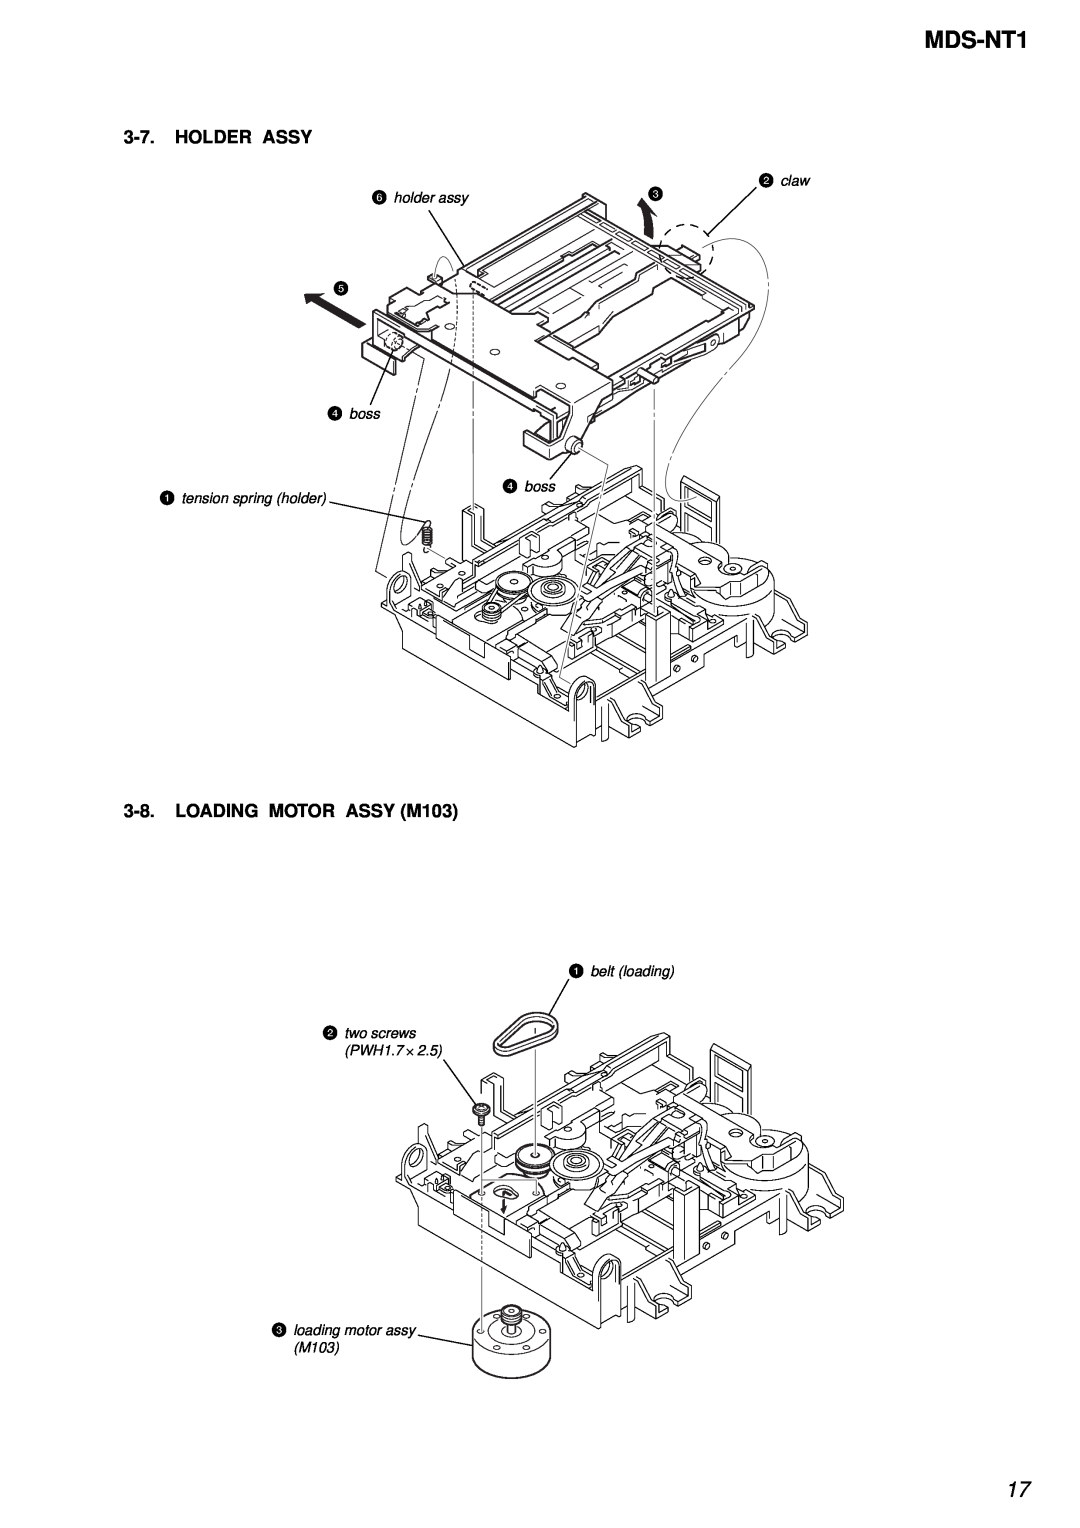 Sony MDS-NT1 service manual Holder Assy, LOADING MOTOR ASSY M103, holder assy 